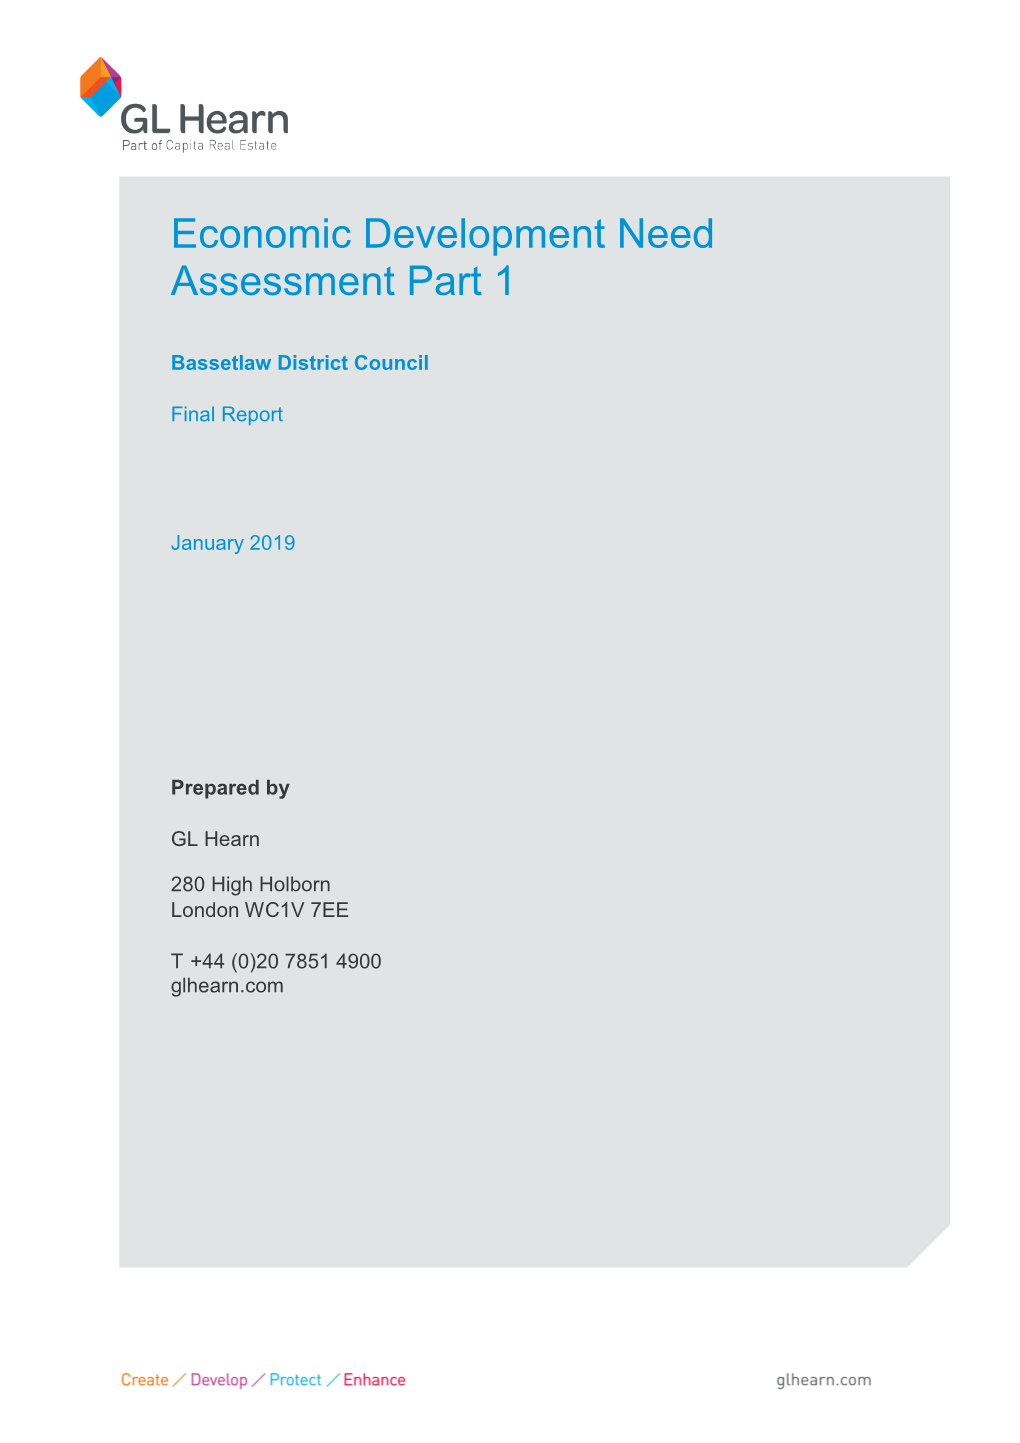 Economic Development Need Assessment Part 1